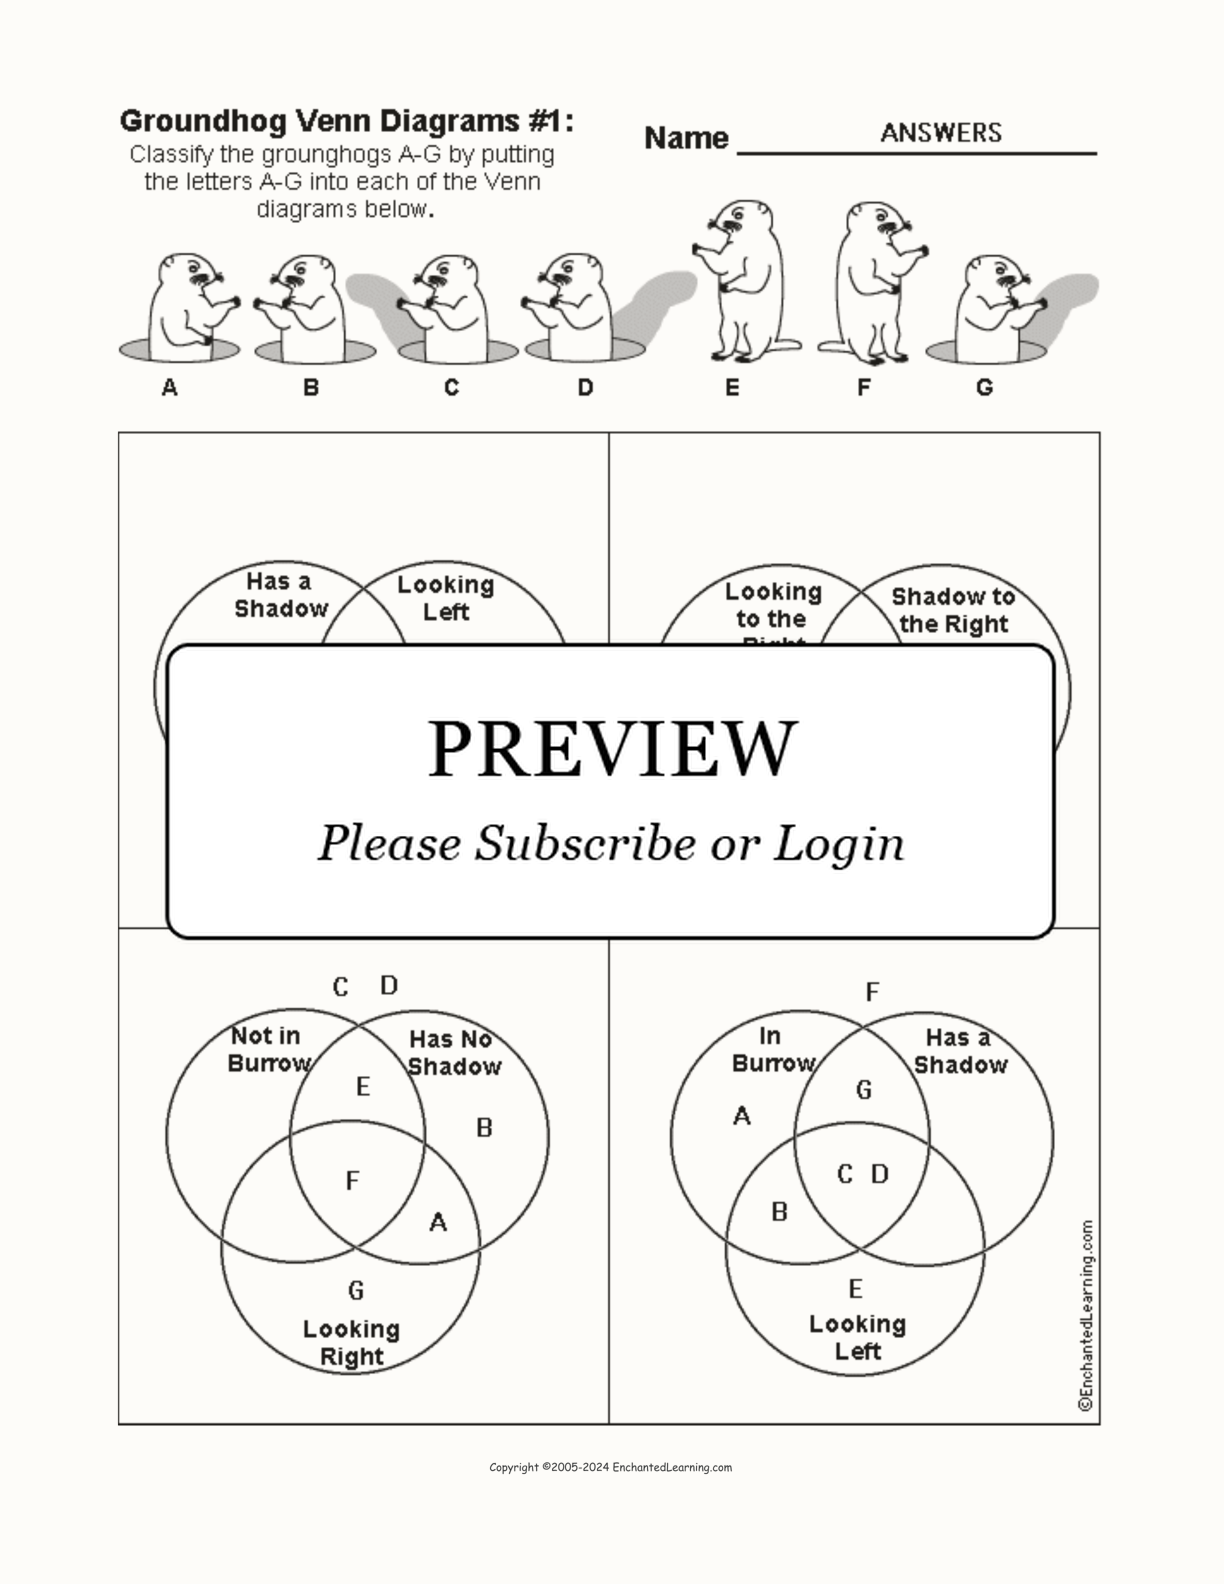 Groundhog Venn Diagrams #1 interactive worksheet page 2